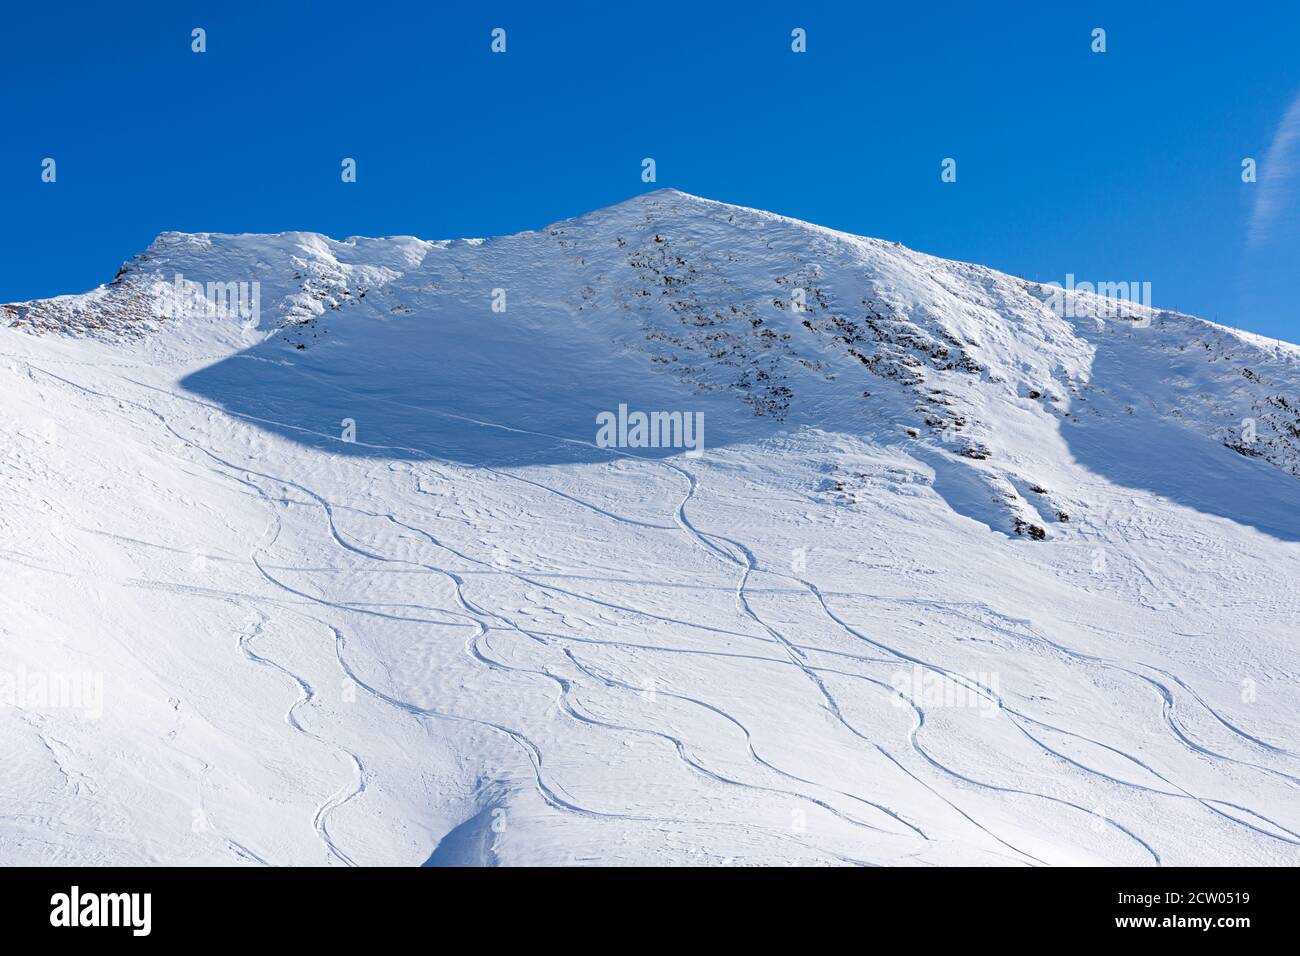 Berghang, Gipfel, Skispuren im Schnee, Allgäuer Alpen, Oberstdorf Foto Stock